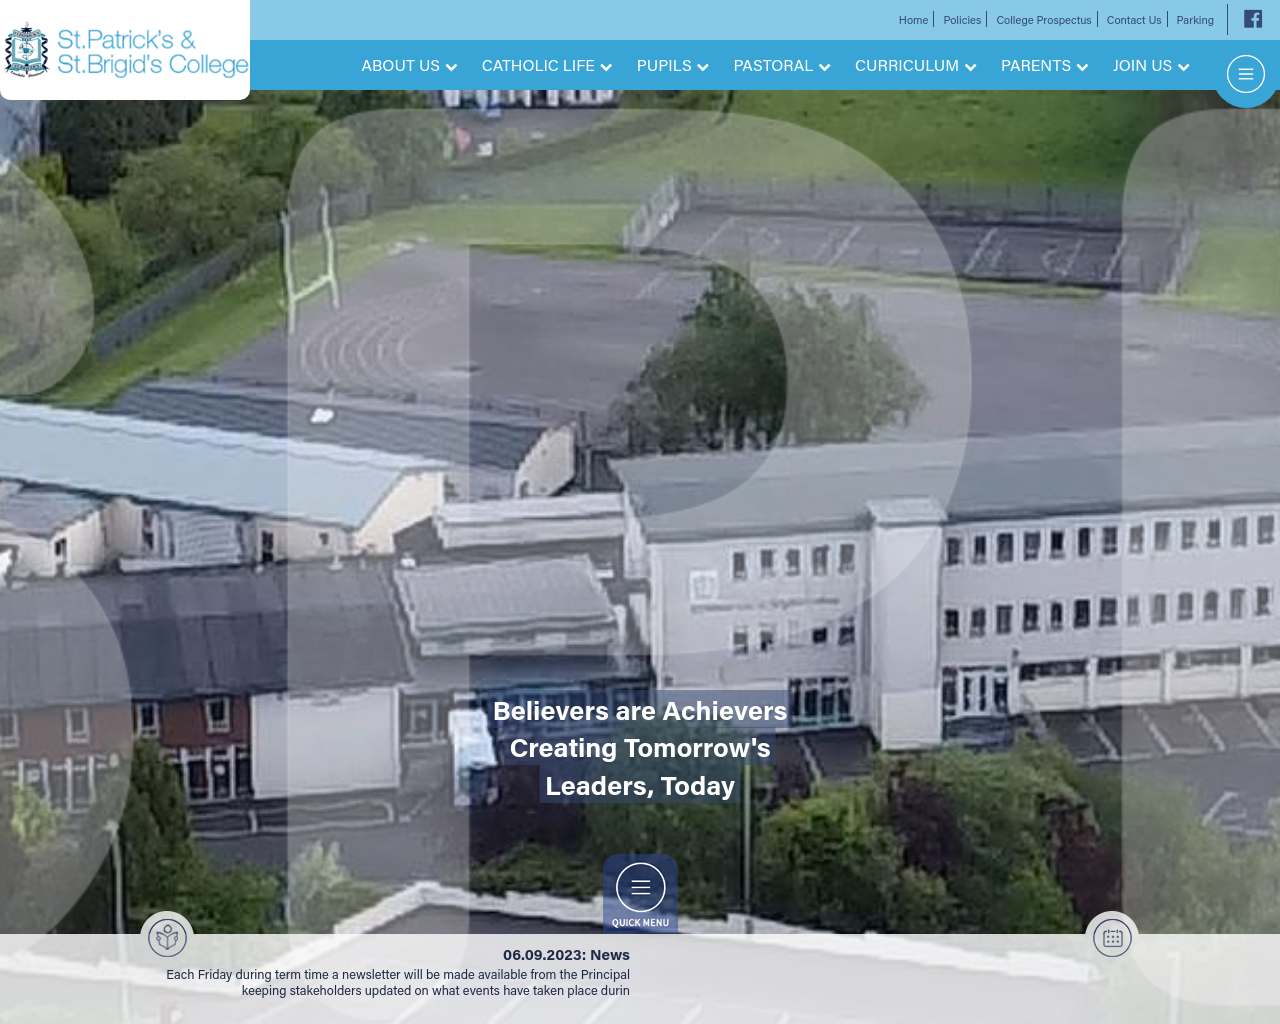 St. Patrick's and St. Brigid's College Website